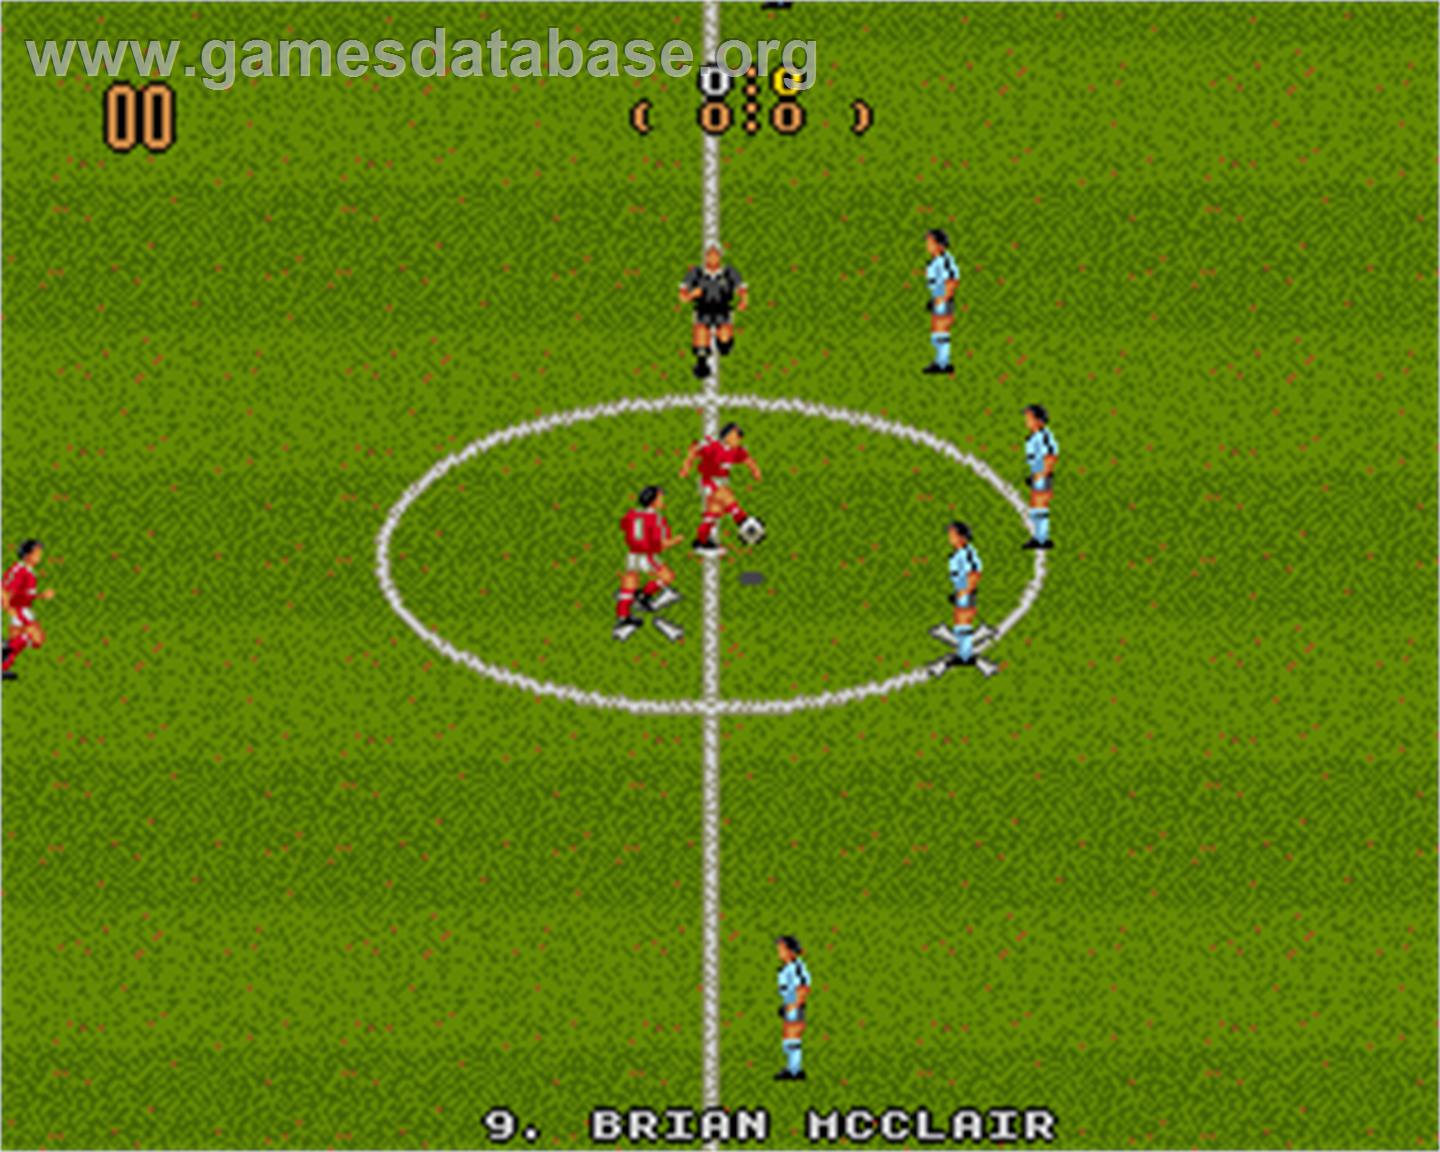 Manchester United Europe - Commodore Amiga - Artwork - In Game